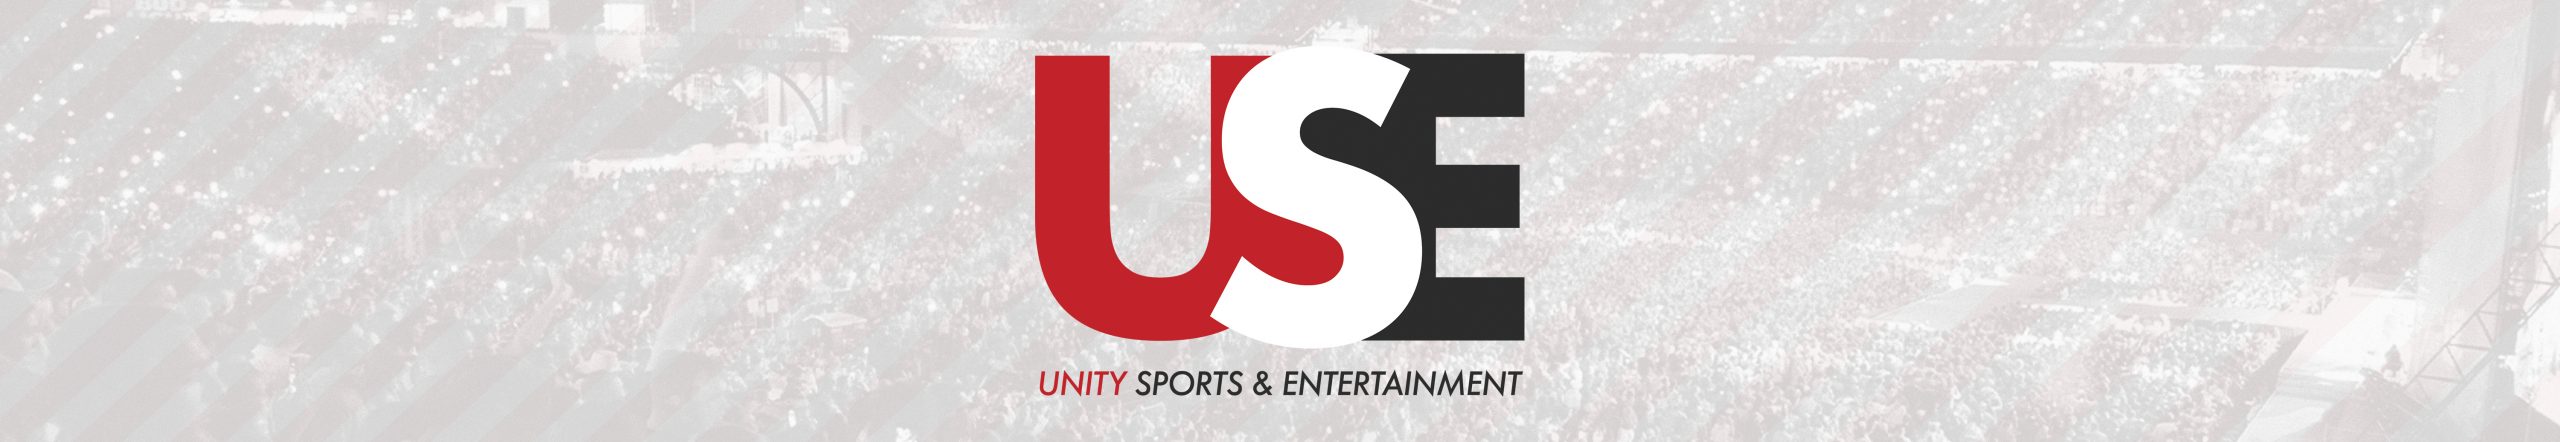 Unity Sports & Entertainment Logo Banner